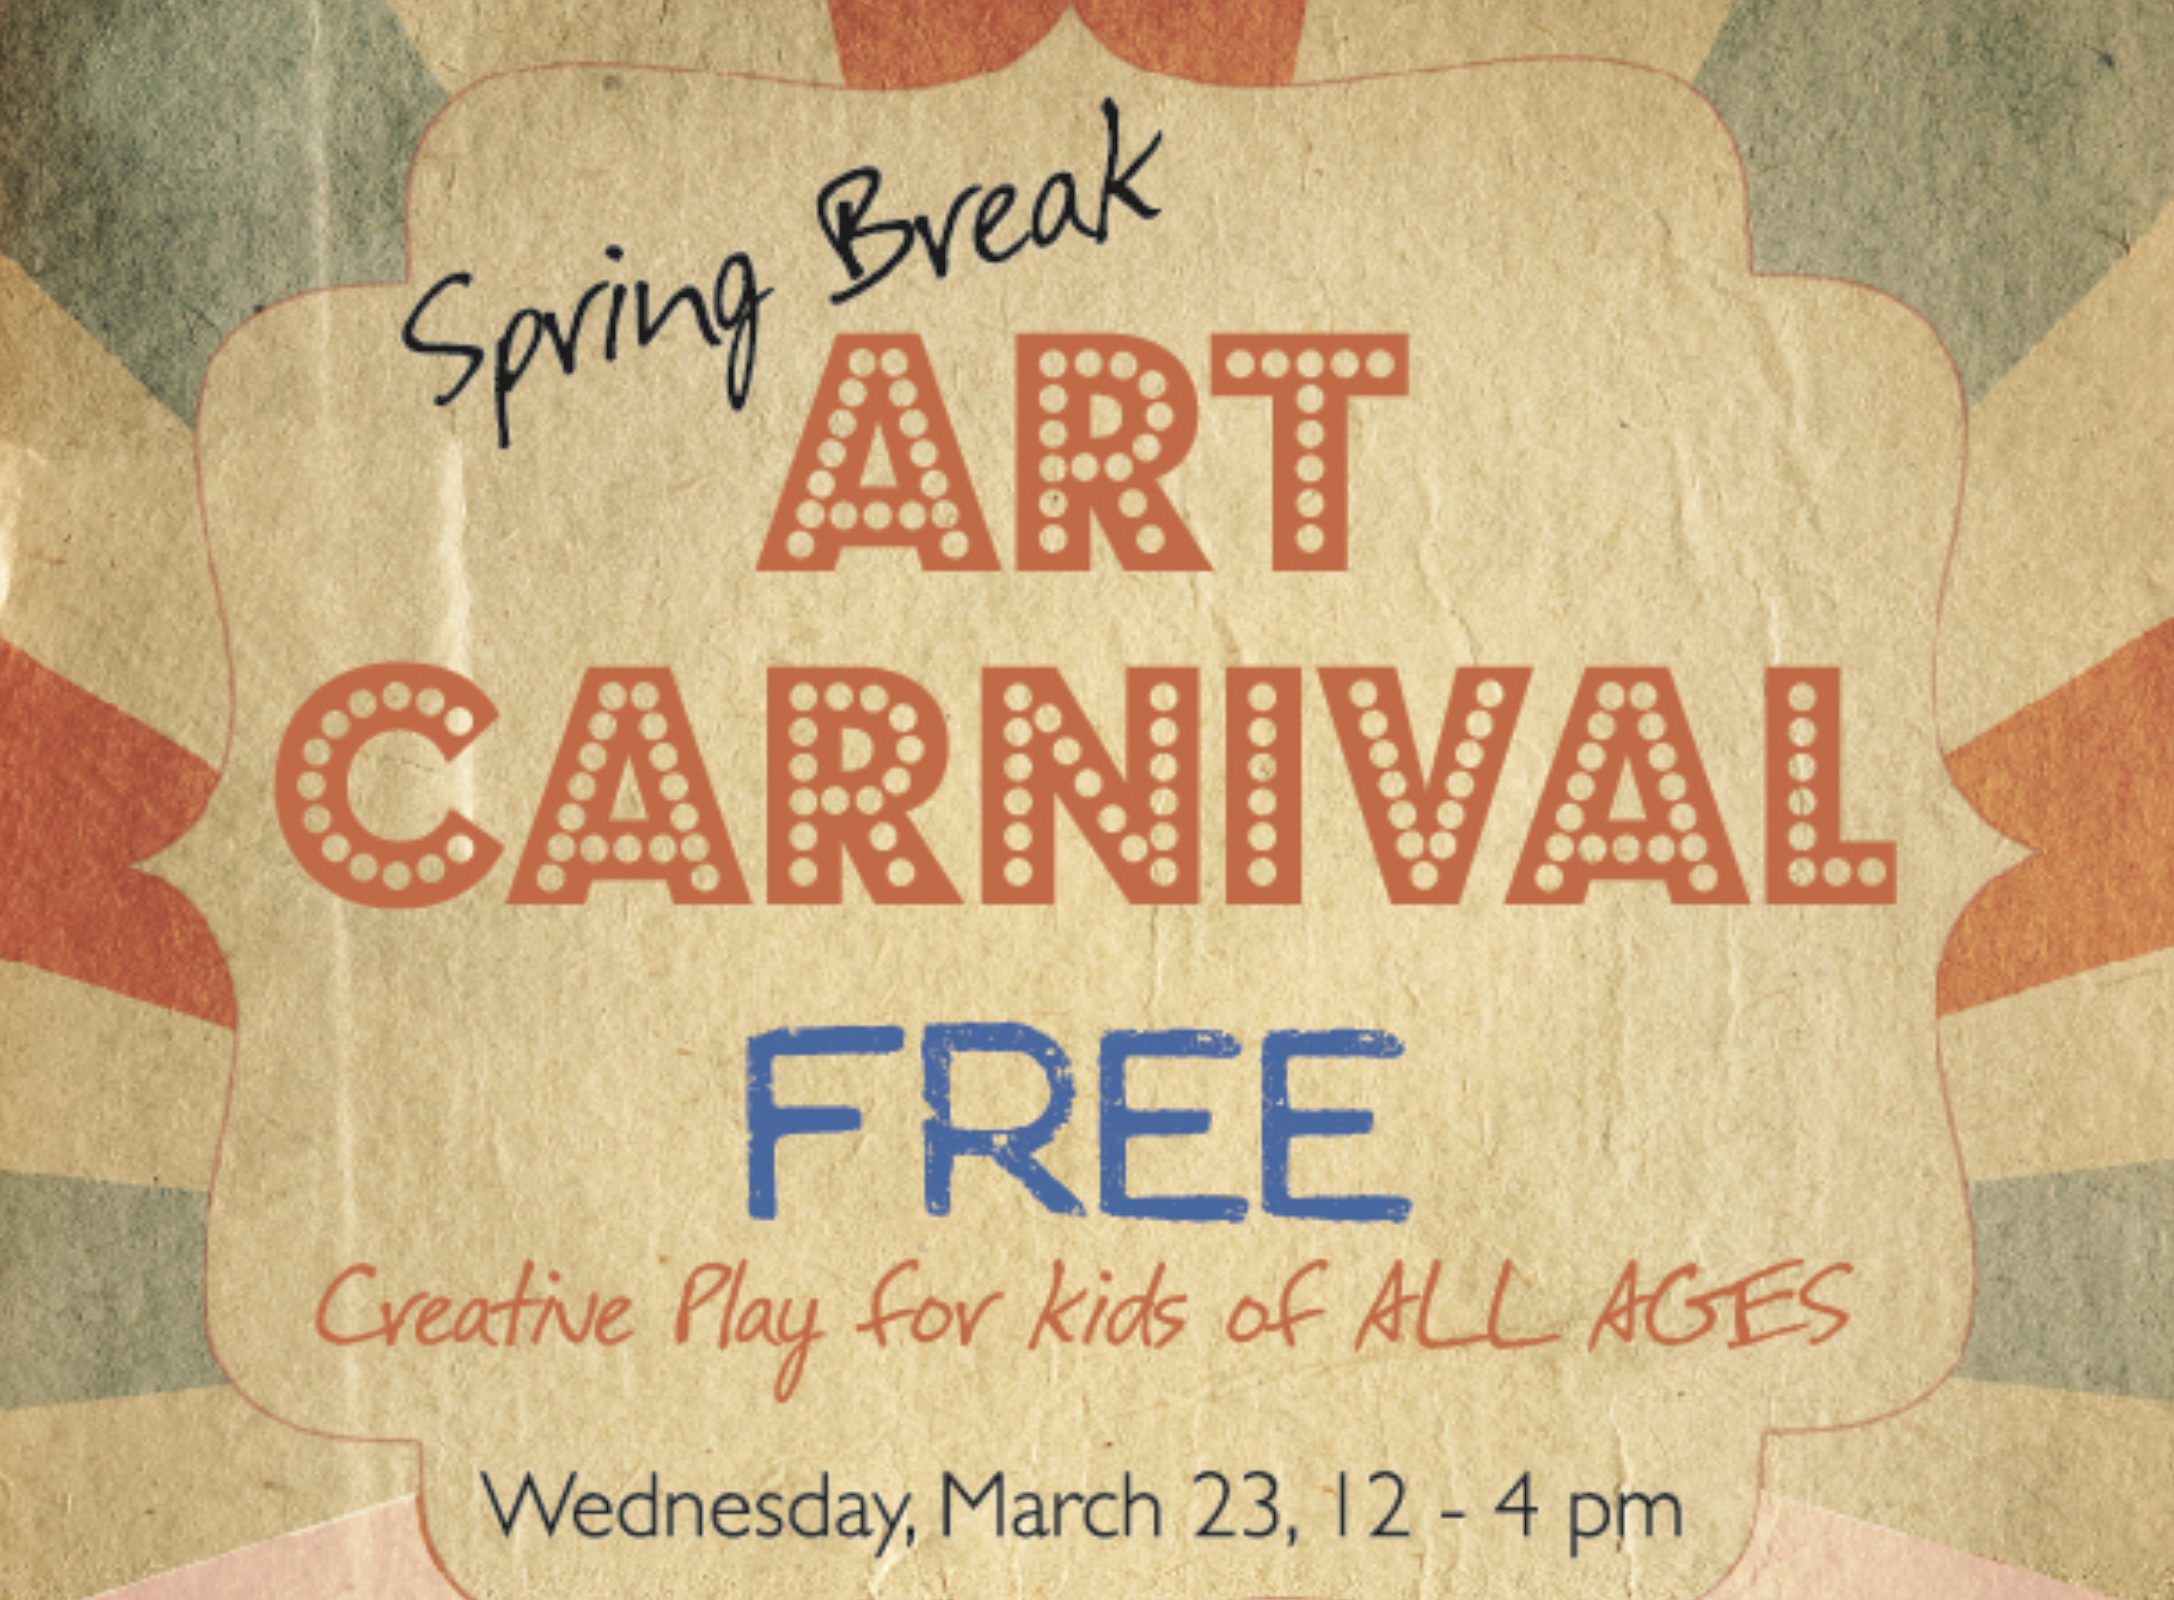 graphic design for spring break art carnival at The Arts Center